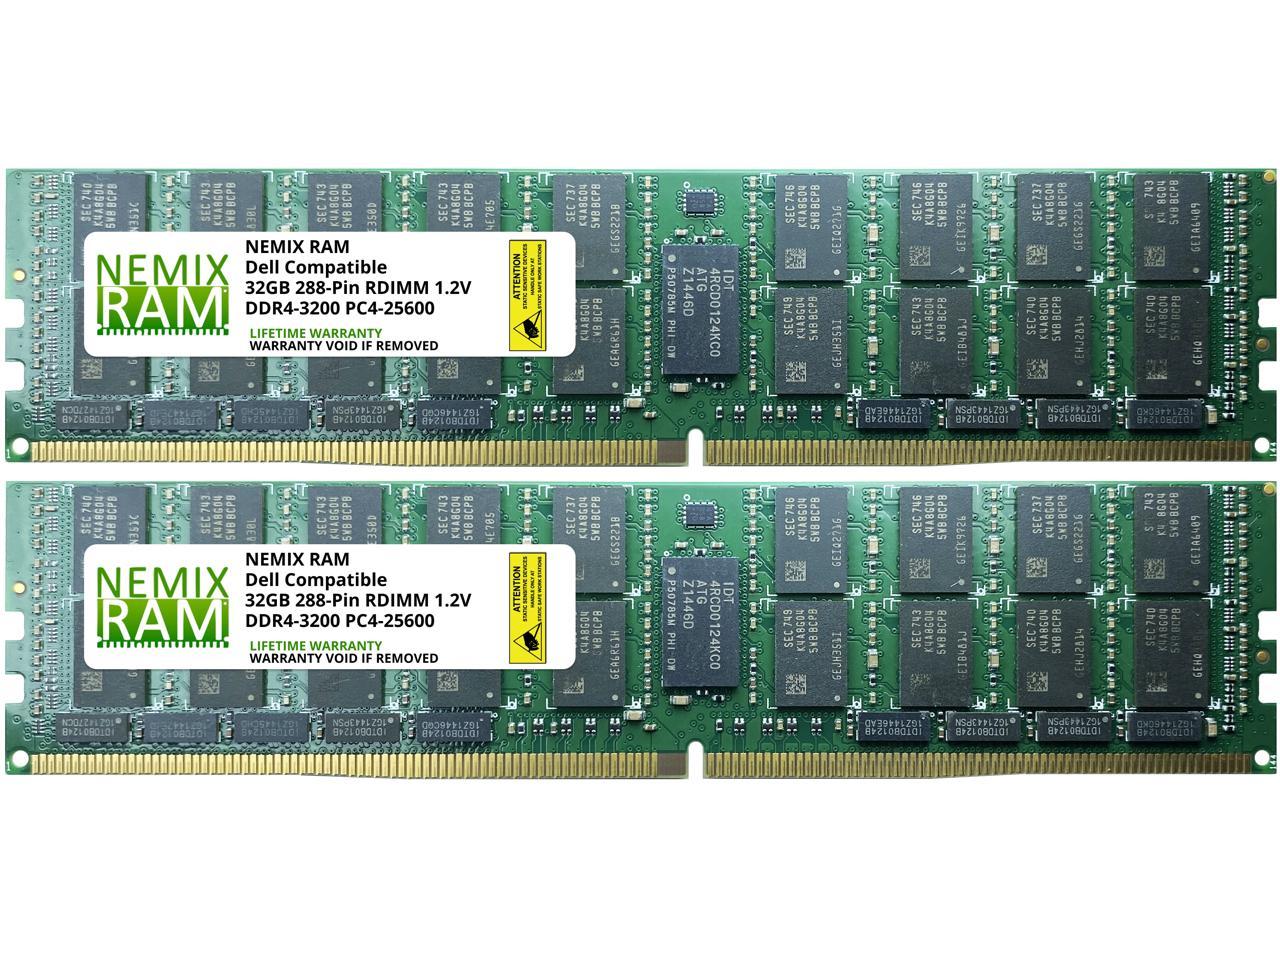 64GB Kit 2x32GB 3200MHz RDIMM 2Rx4 for Dell Servers by Nemix Ram 